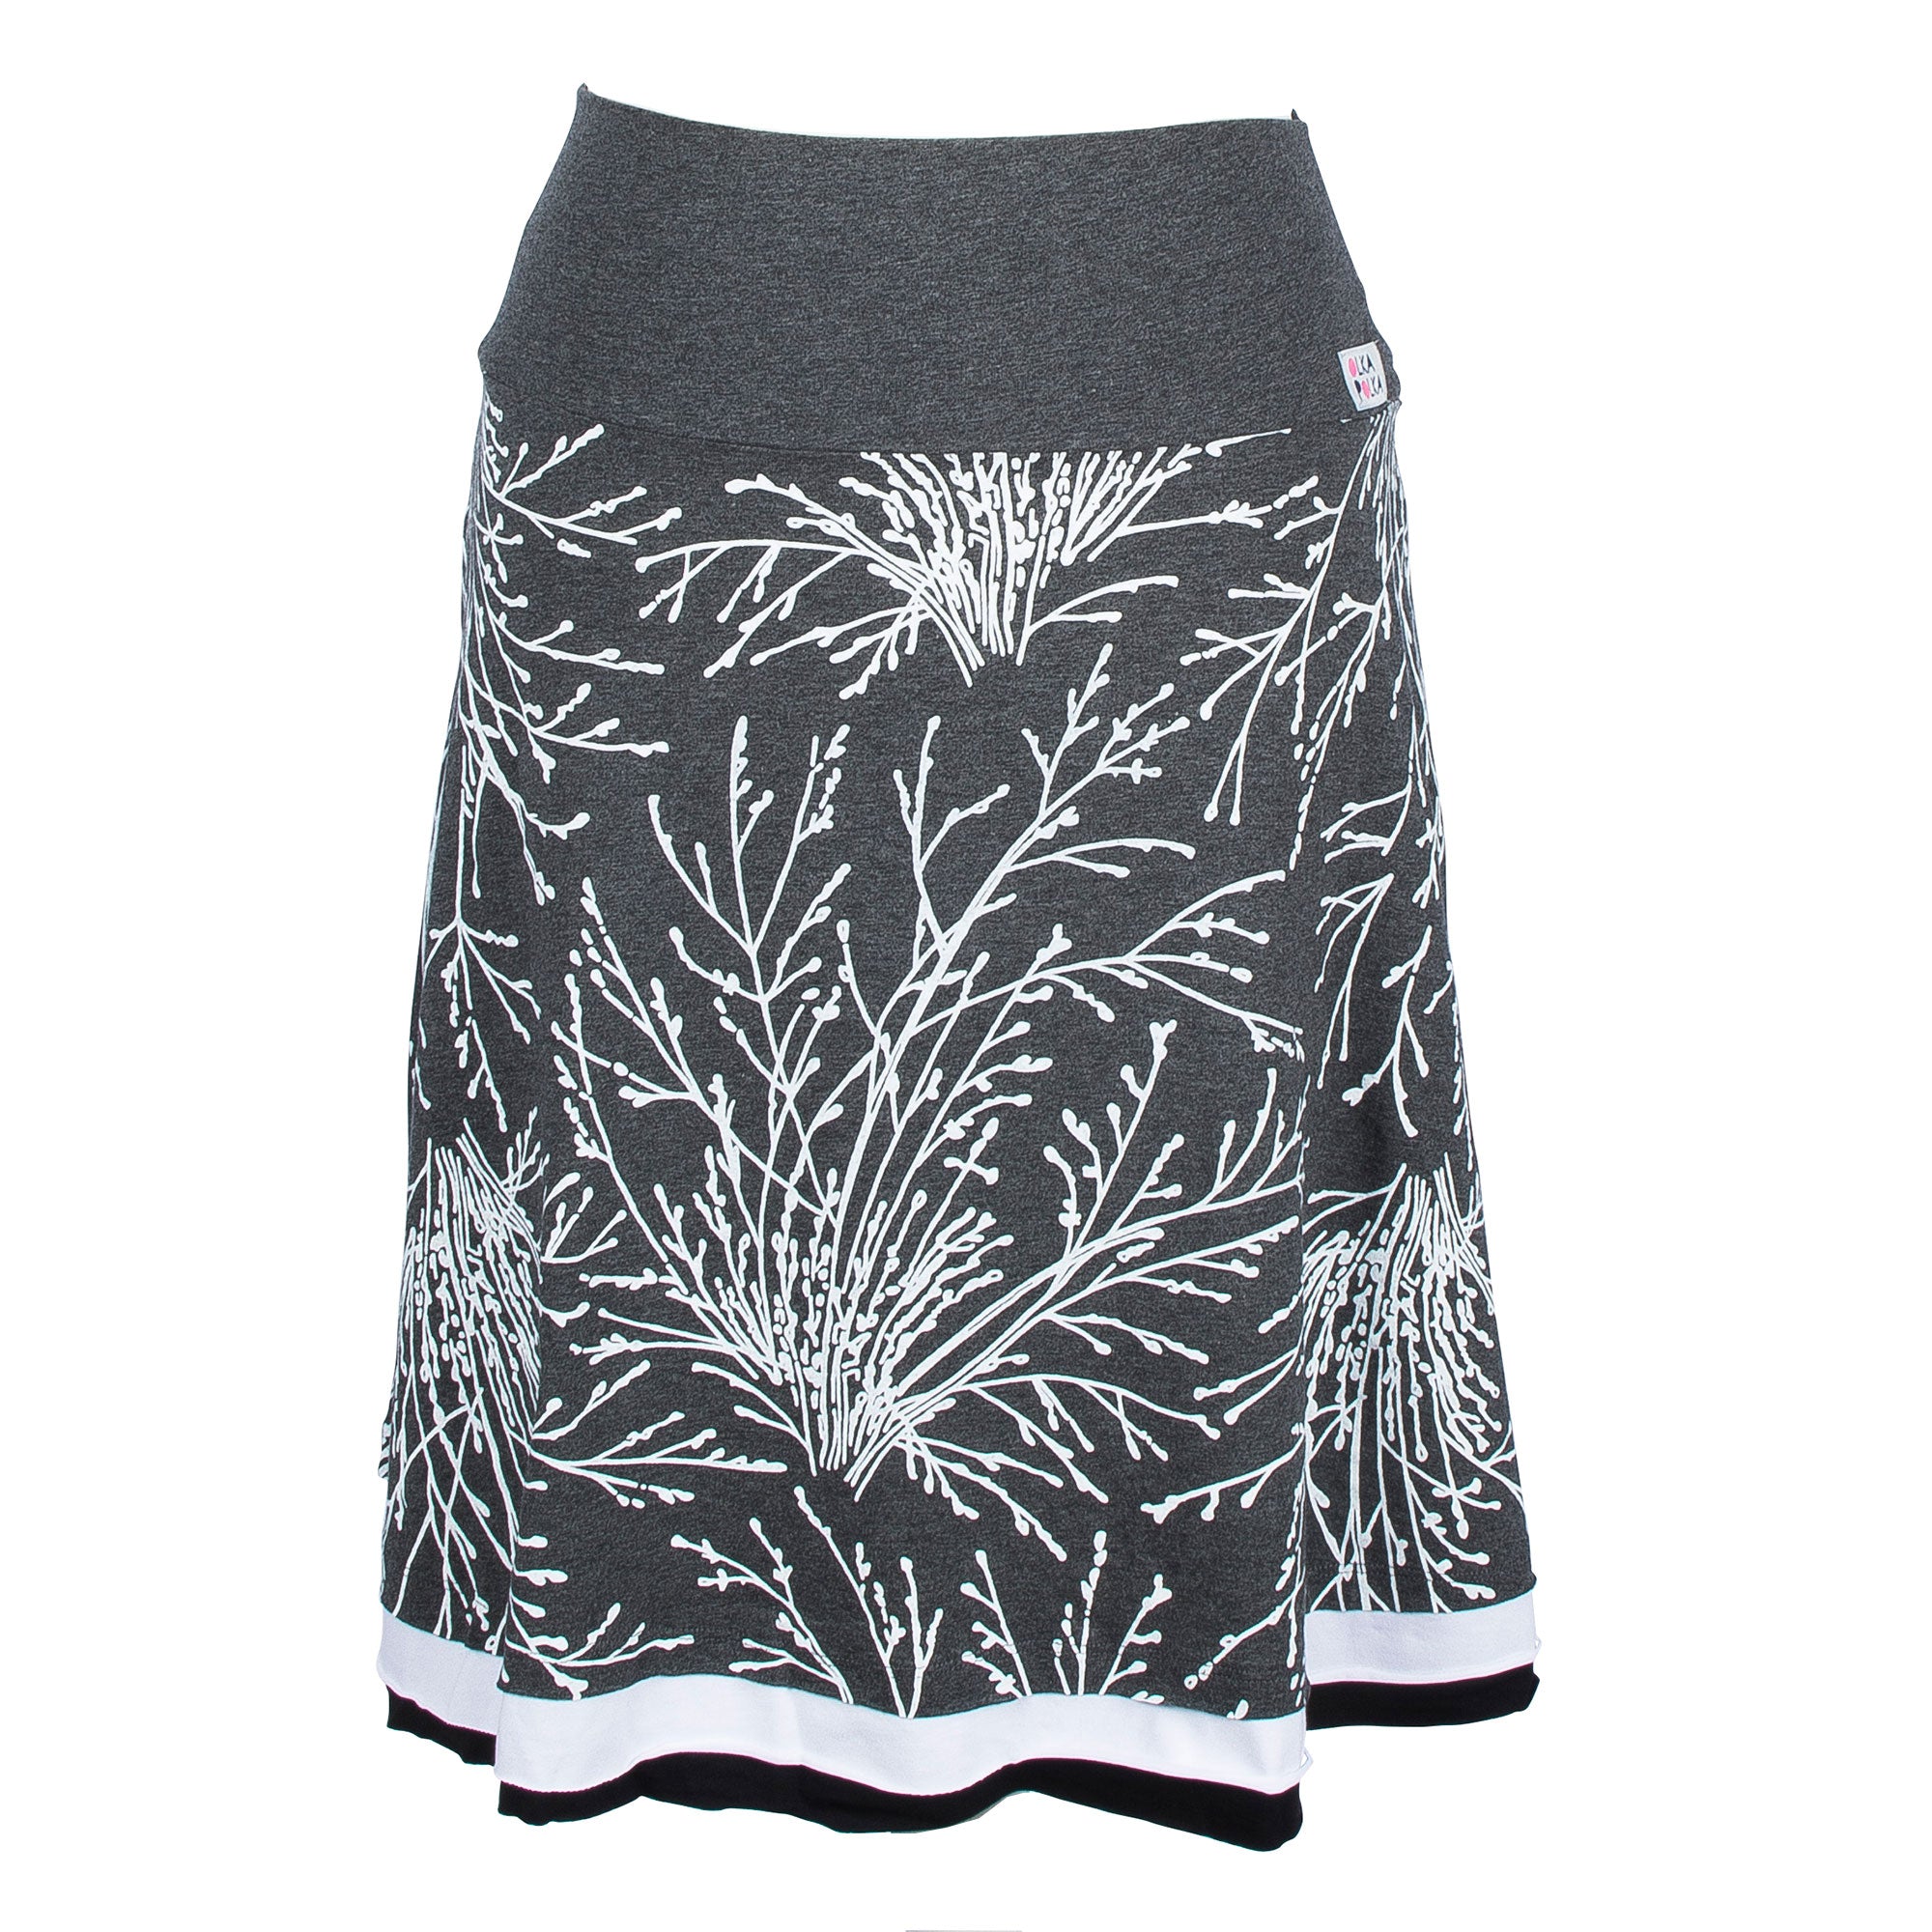 Grey coral bush skirt